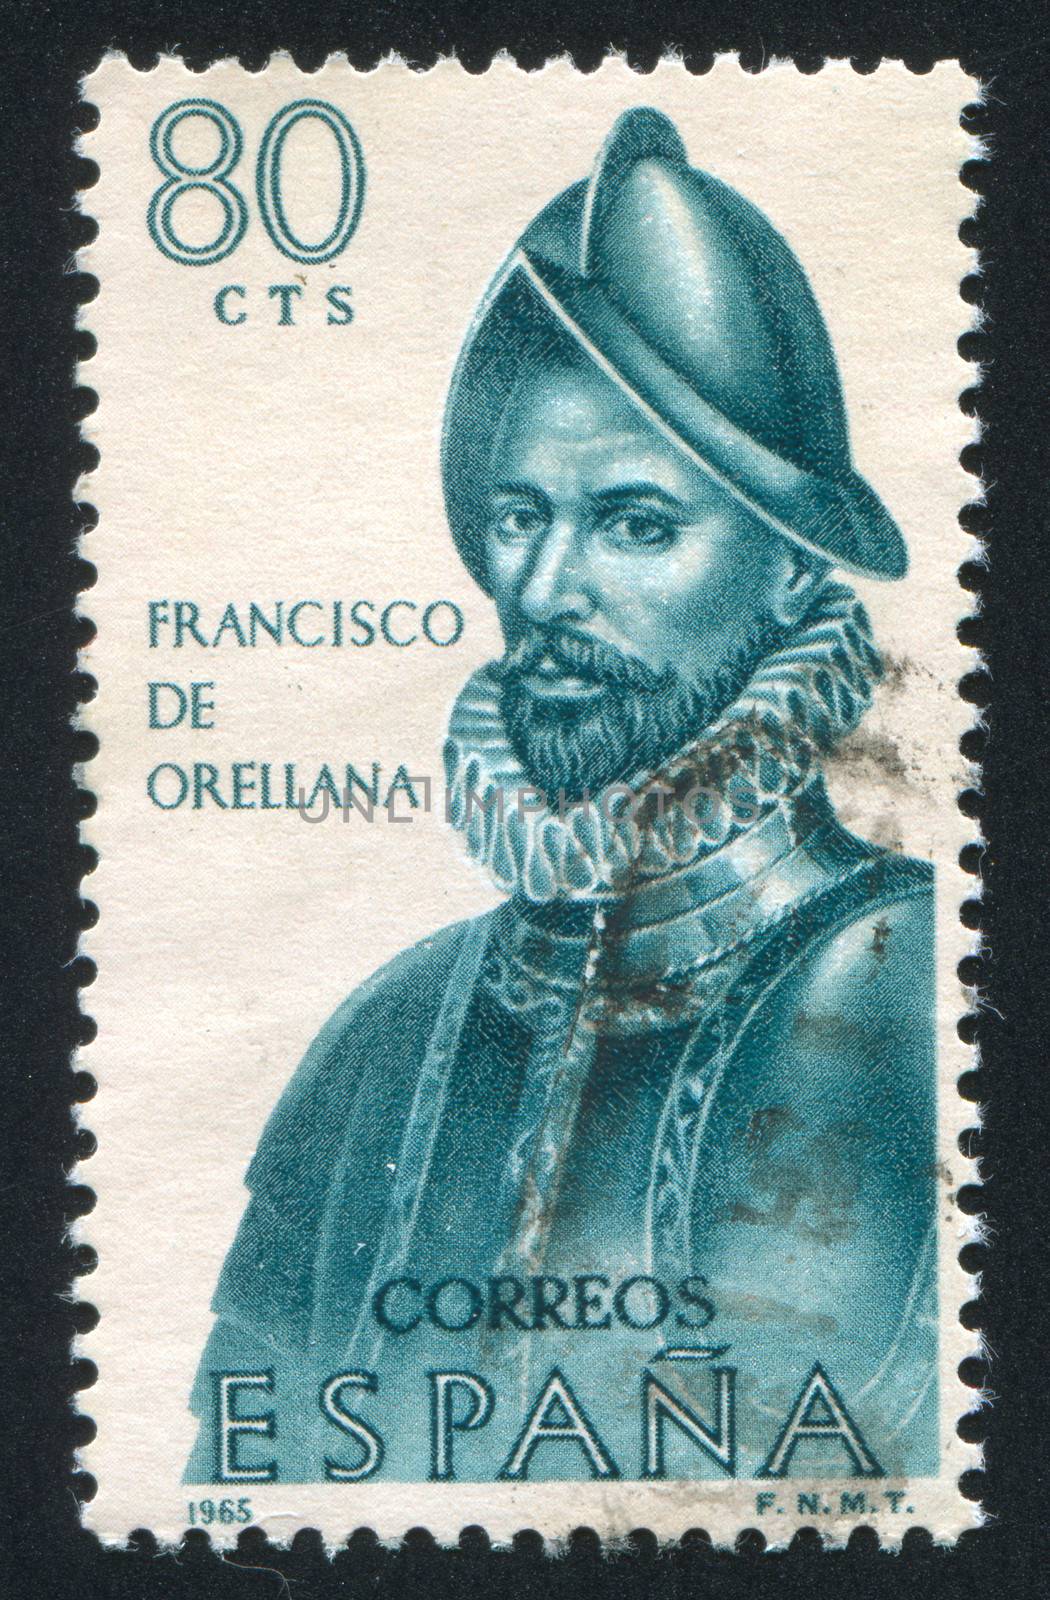 SPAIN - CIRCA 1965: stamp printed by Spain, shows Francisco de Orellana, circa 1965